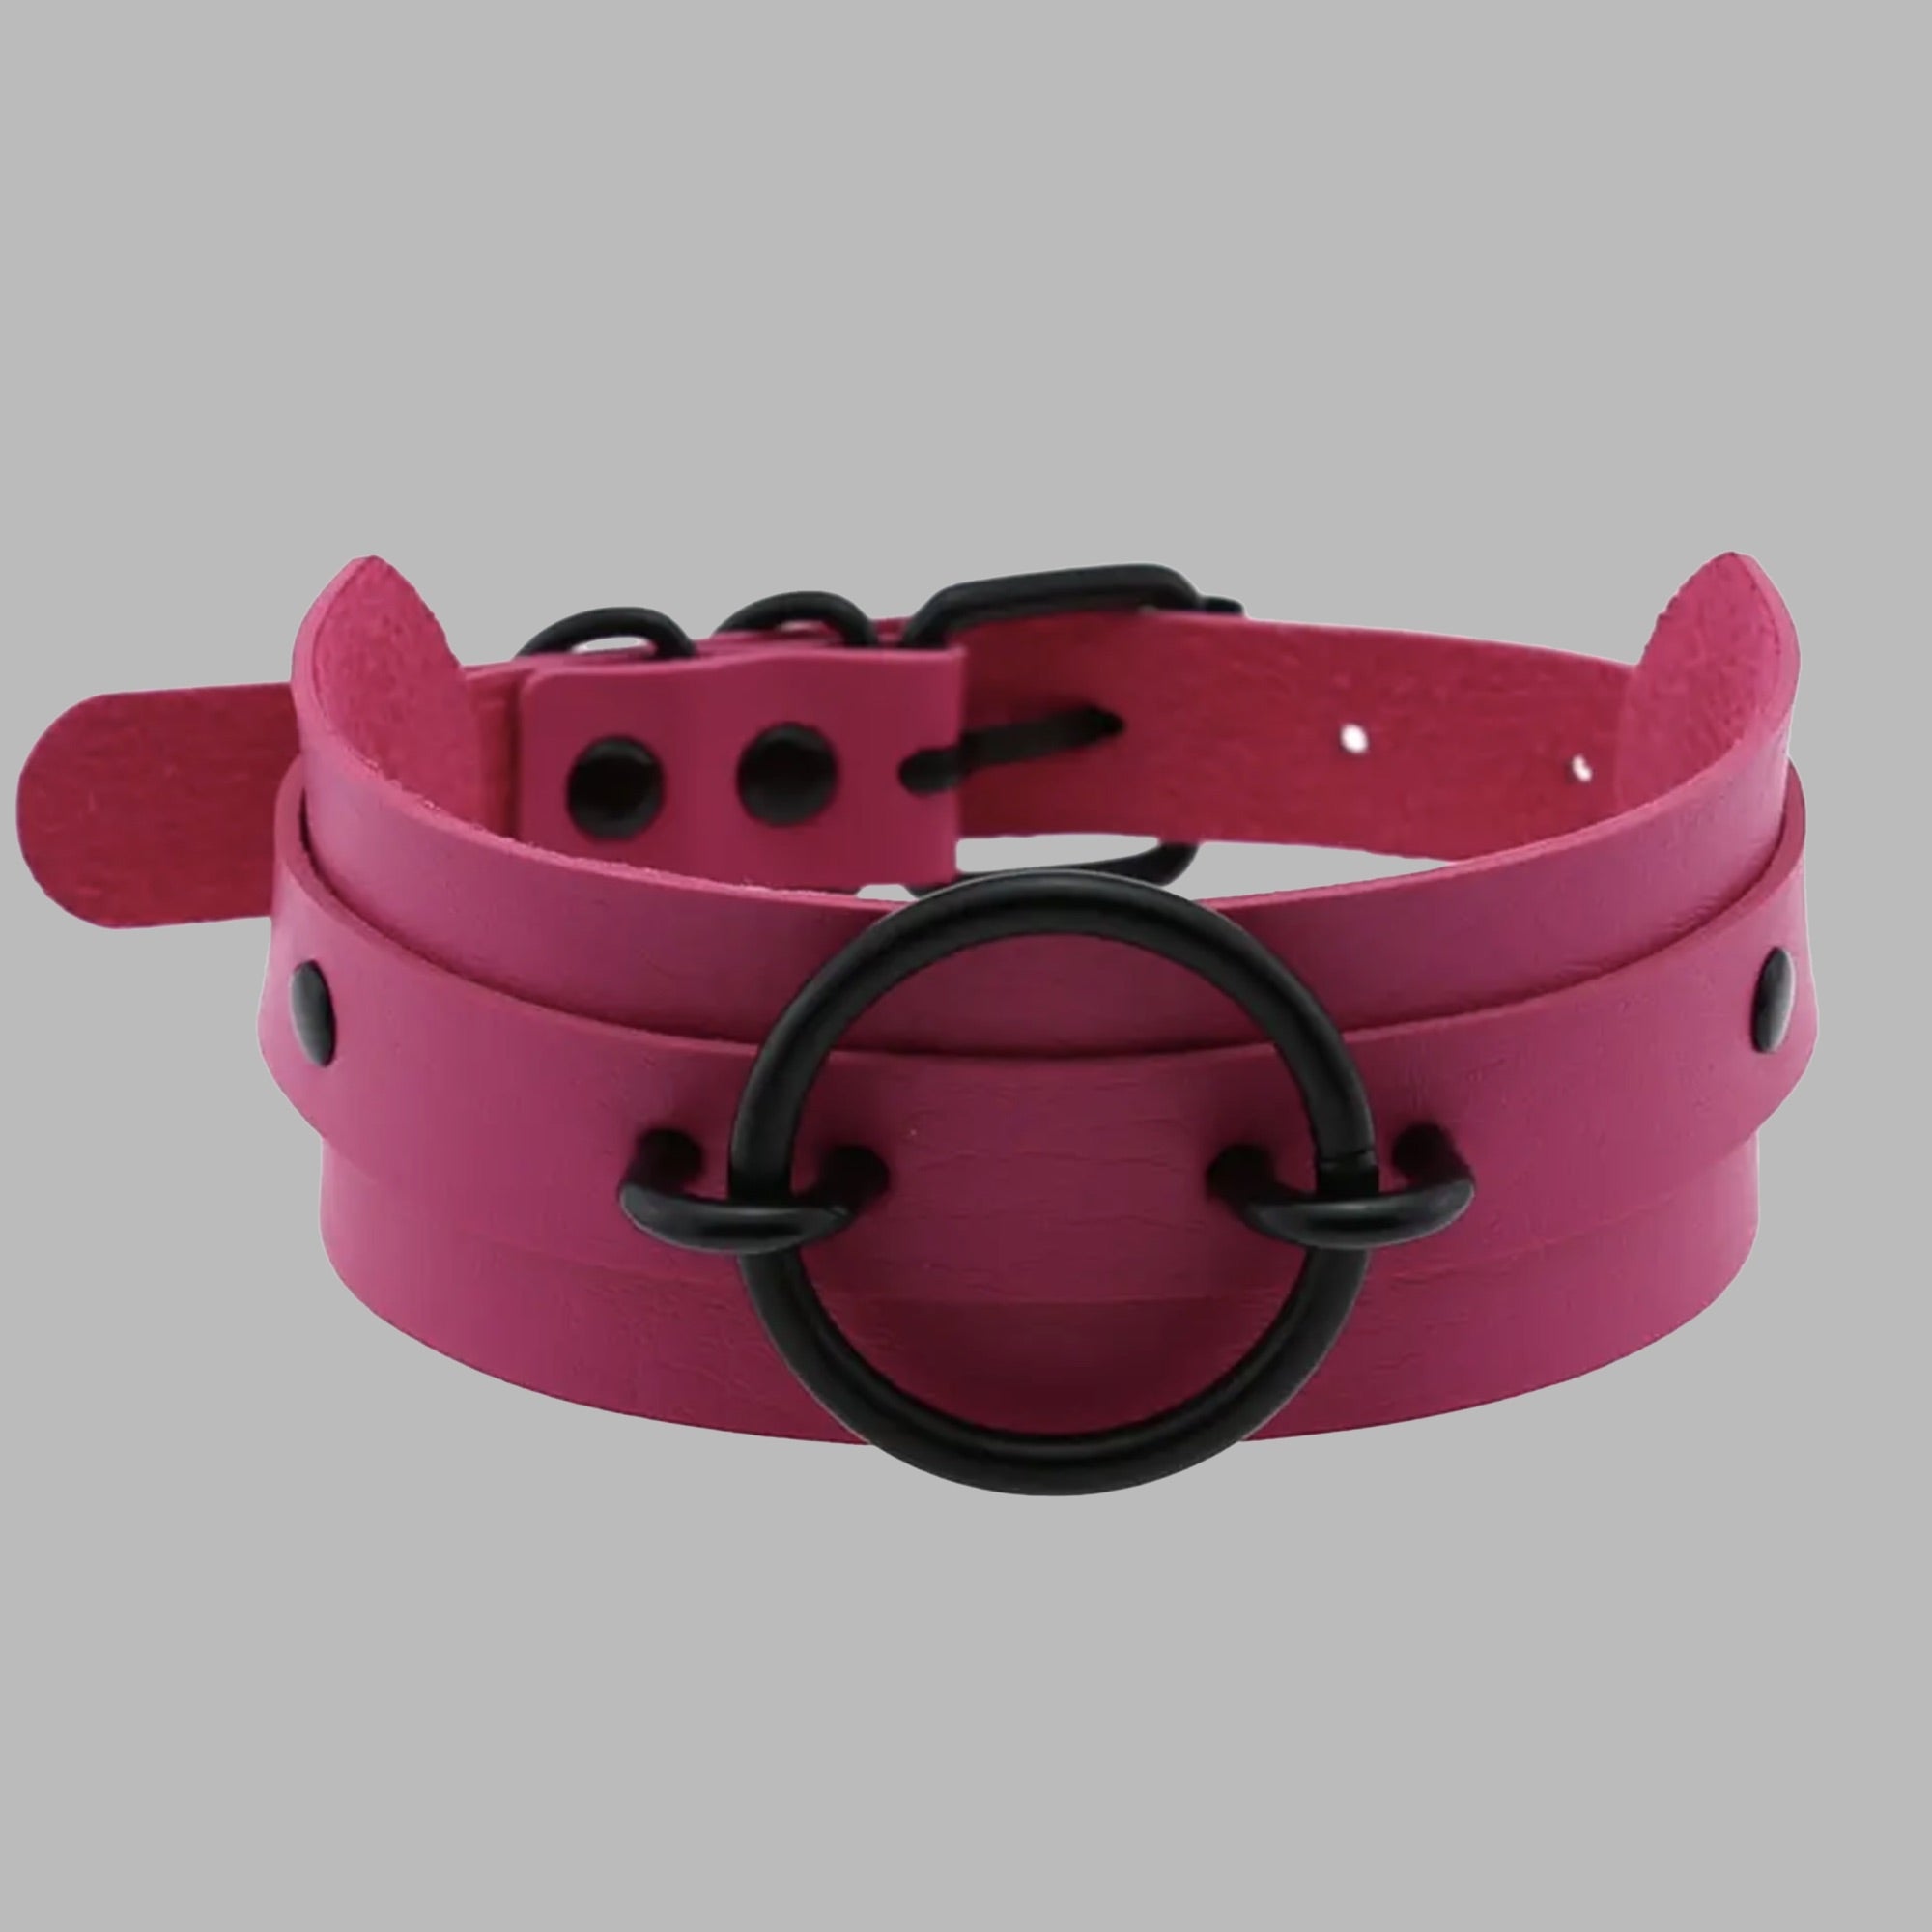 Fixed O Ring Choker Collar - Hot Pink & Black